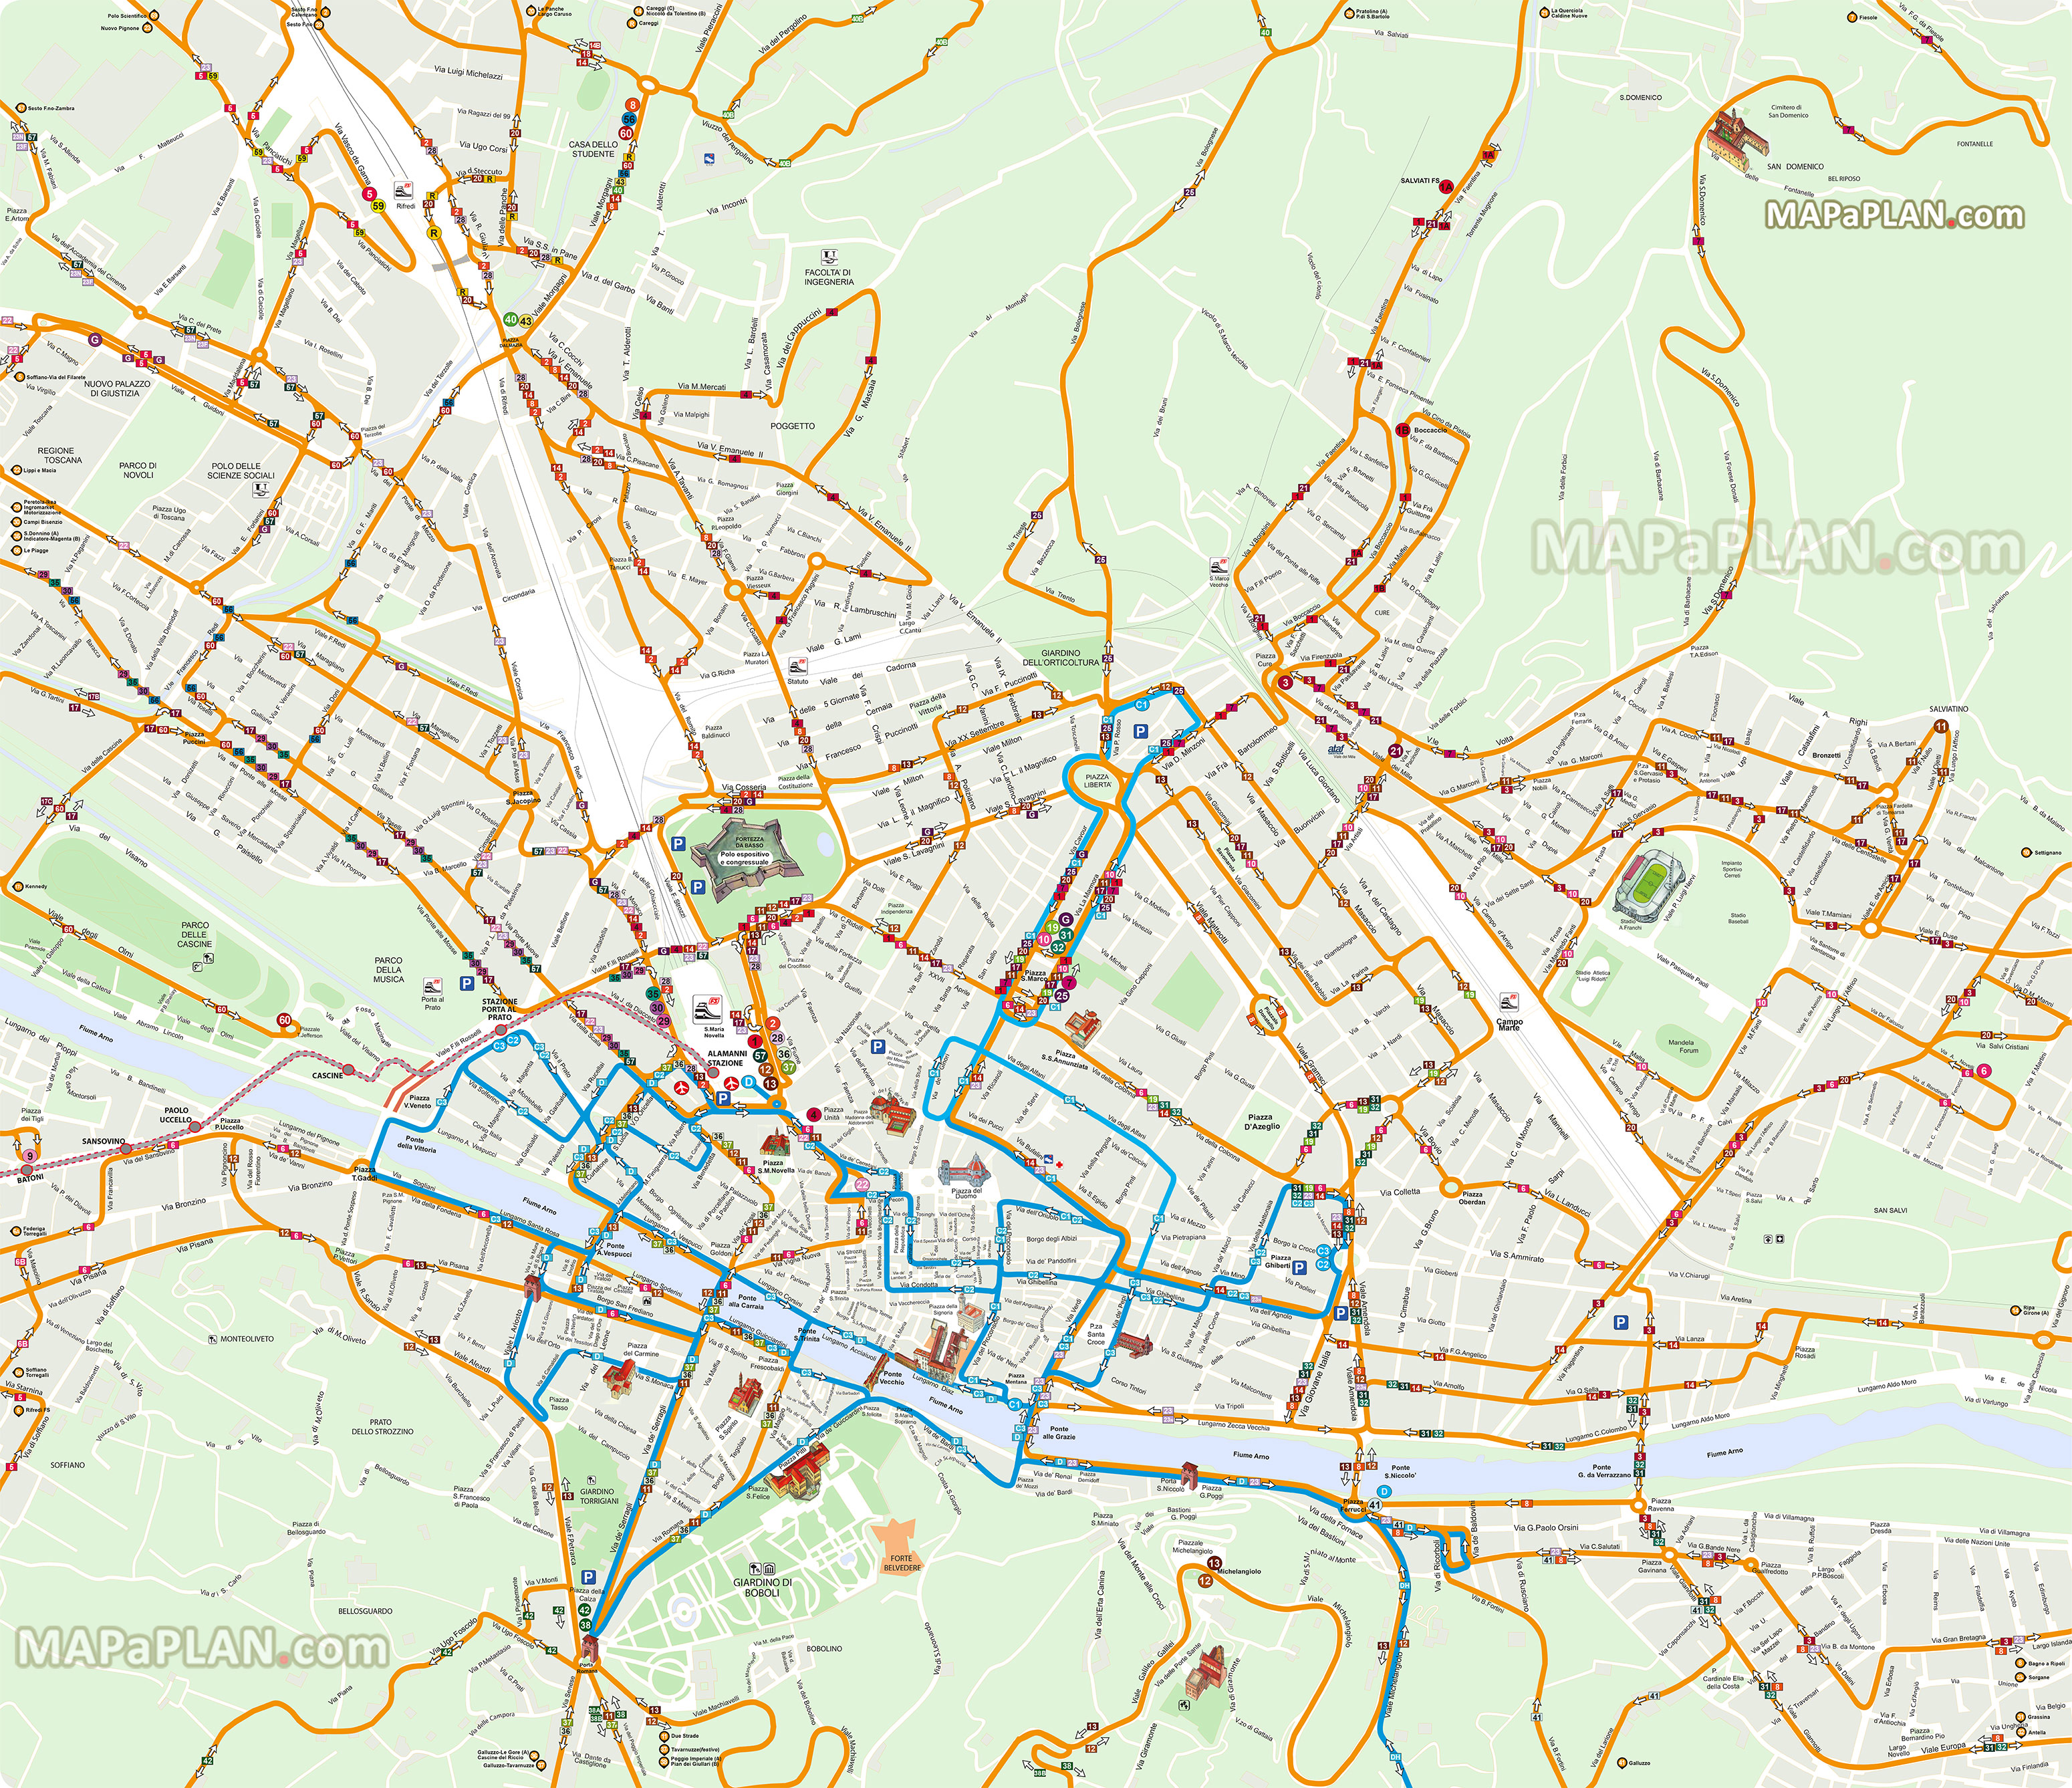 official public transport map ataf li nea network buses azienda trasporti pubblici area fiorentina Florence top tourist attractions map